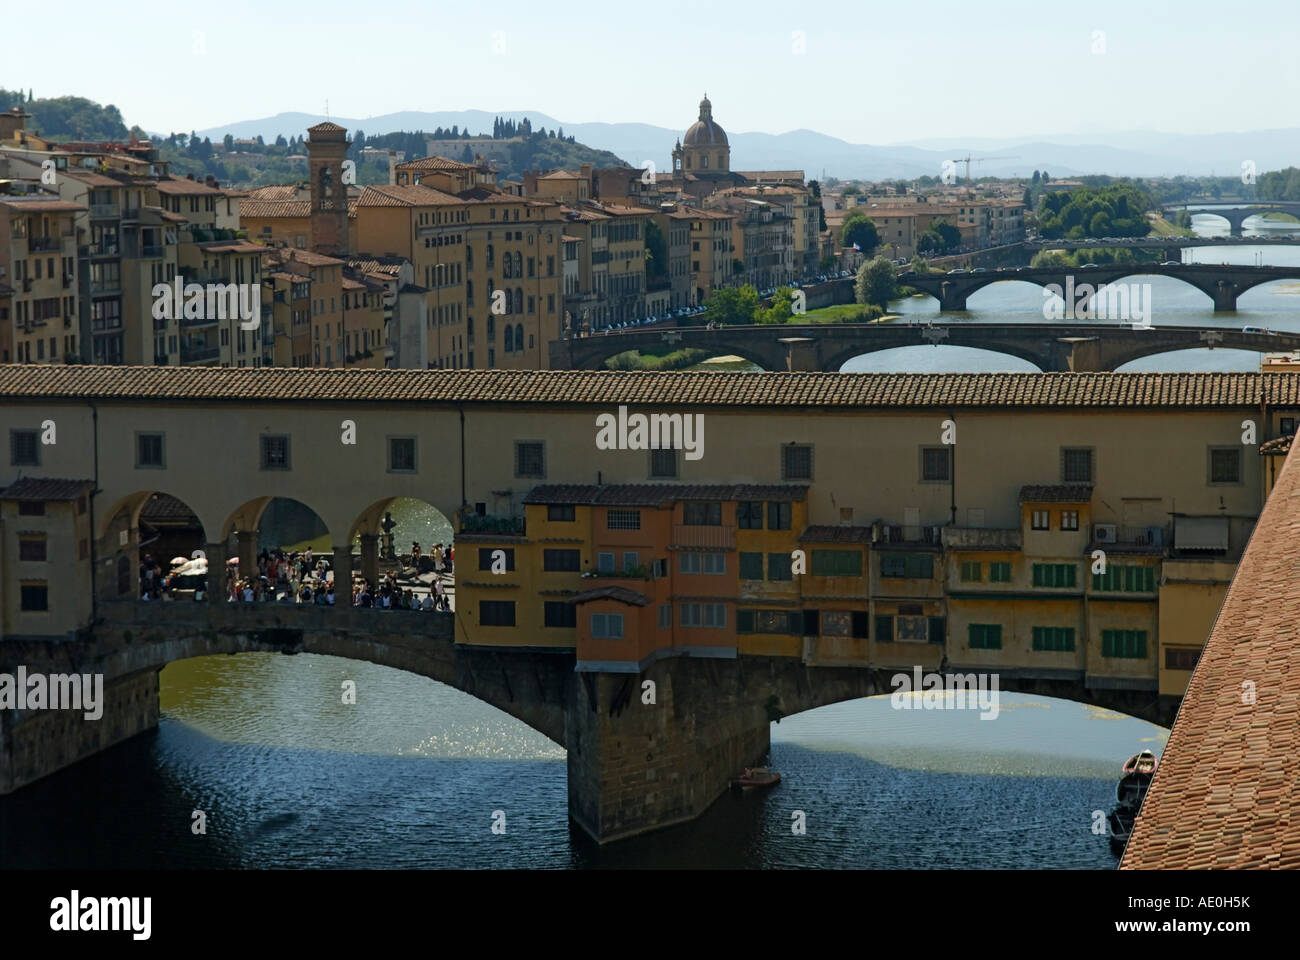 Ponte vecchio, Florence, Italy, high angle view Stock Photo